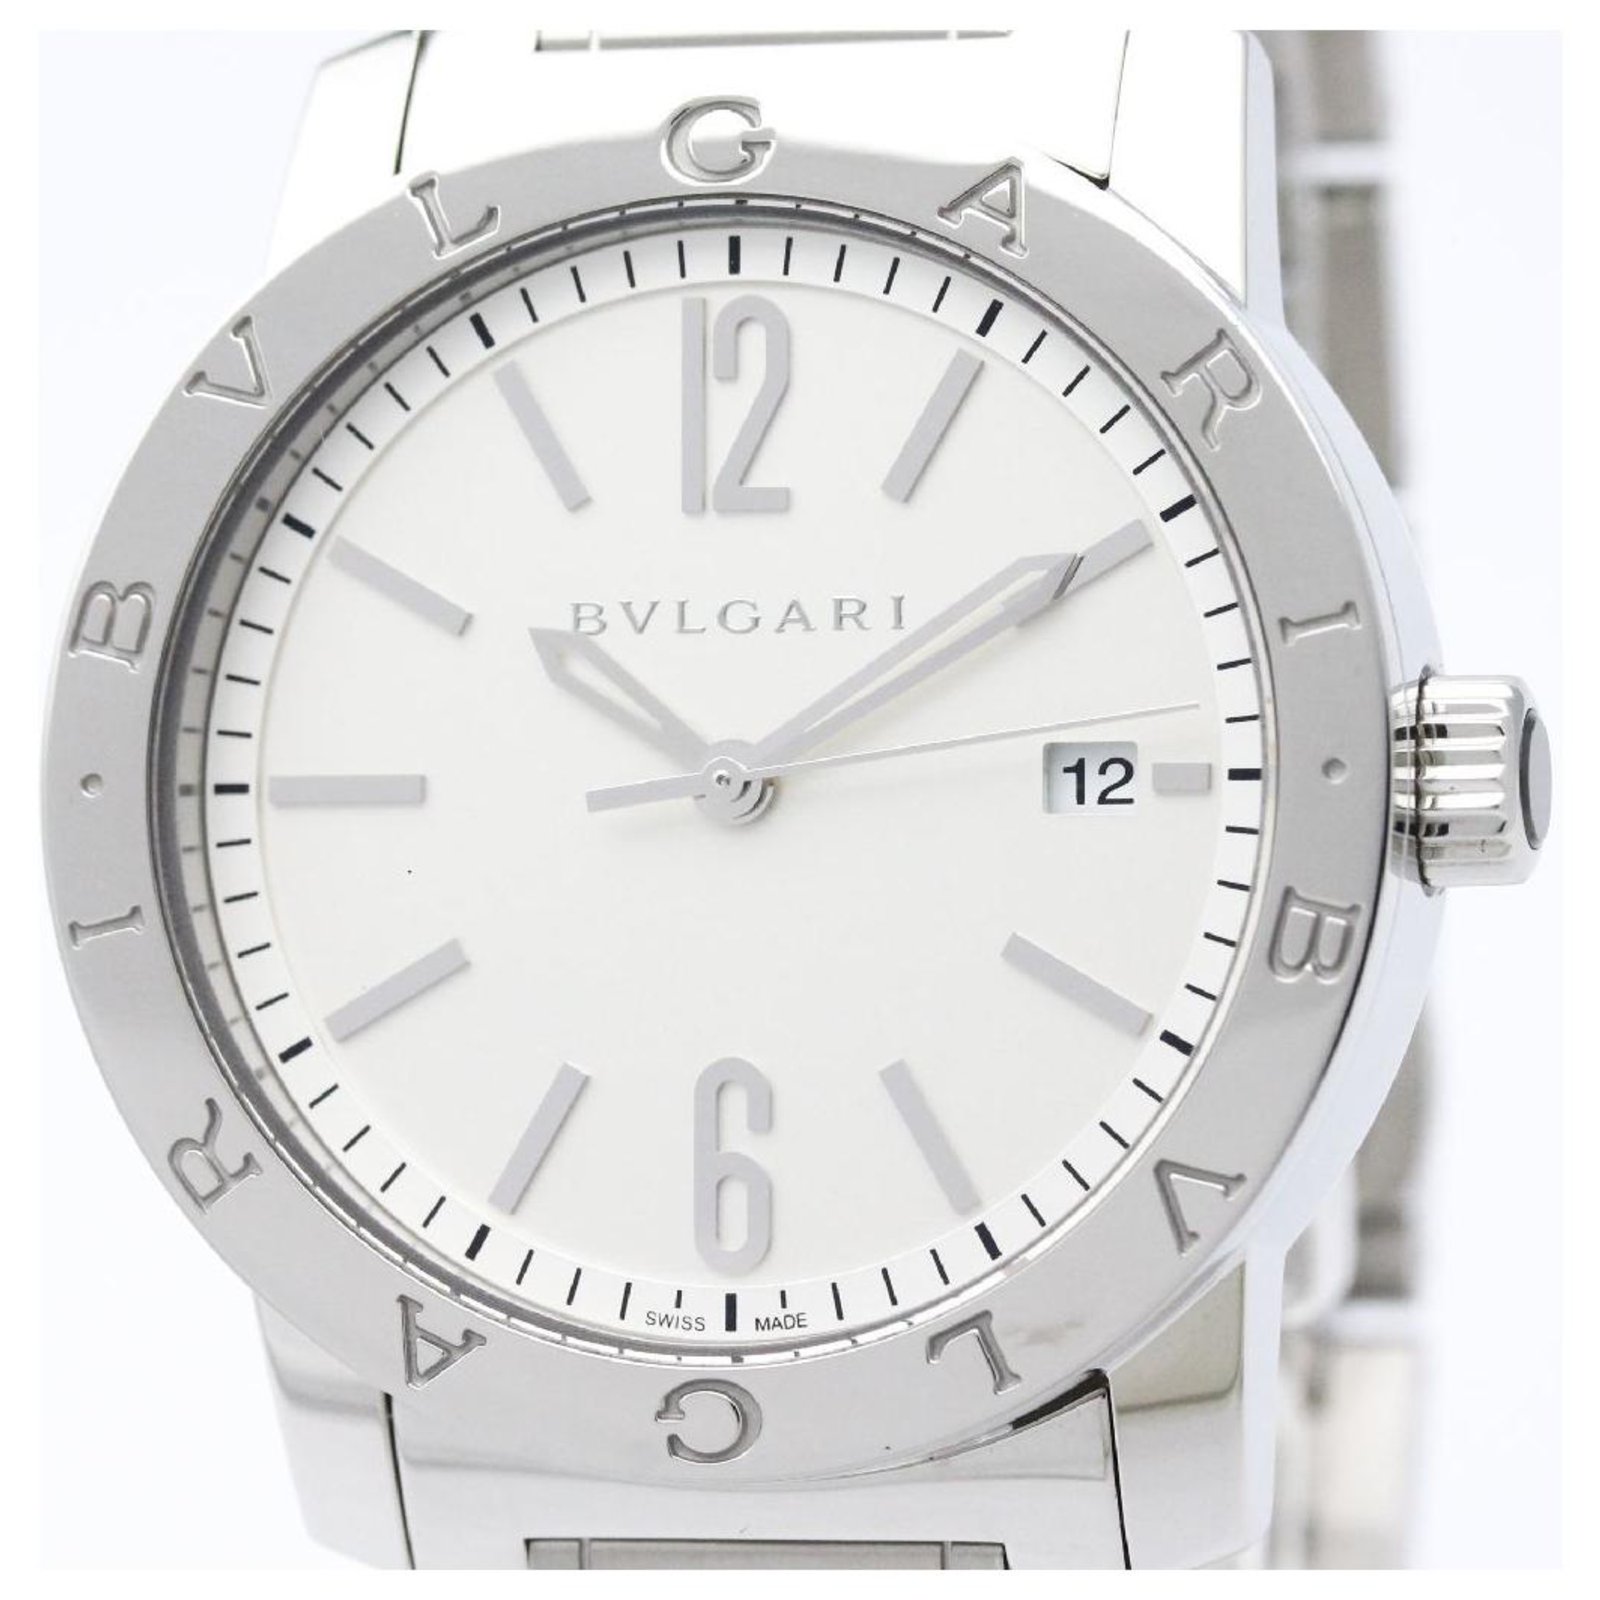 Bvlgari Men's Solotempo Automatic Watch